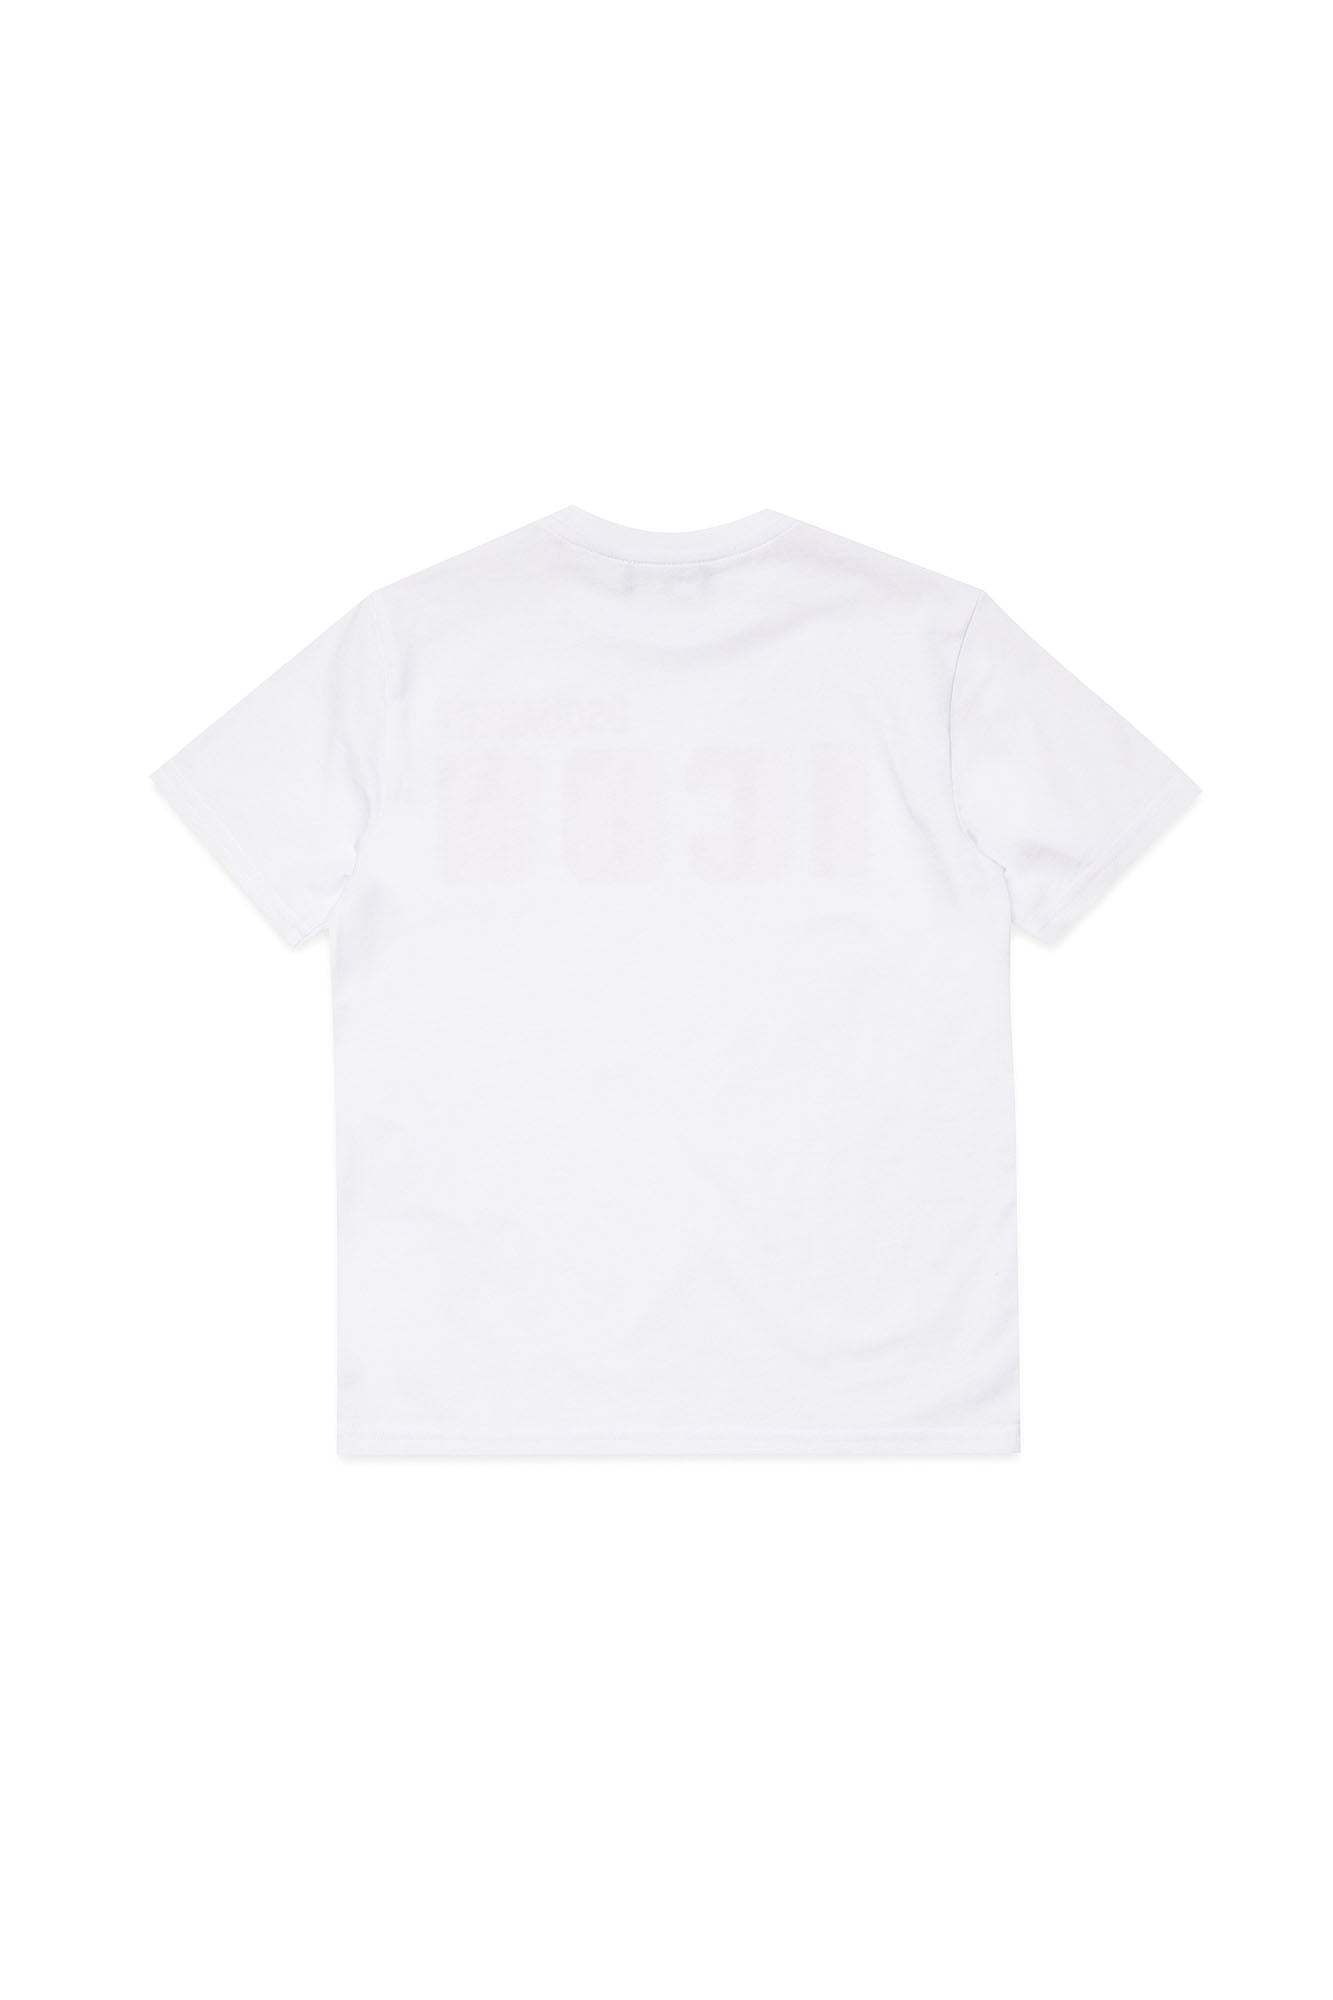 DSQUARED2-T-Shirt Unisex Bambino Icon-Bianco Rosa Fluo